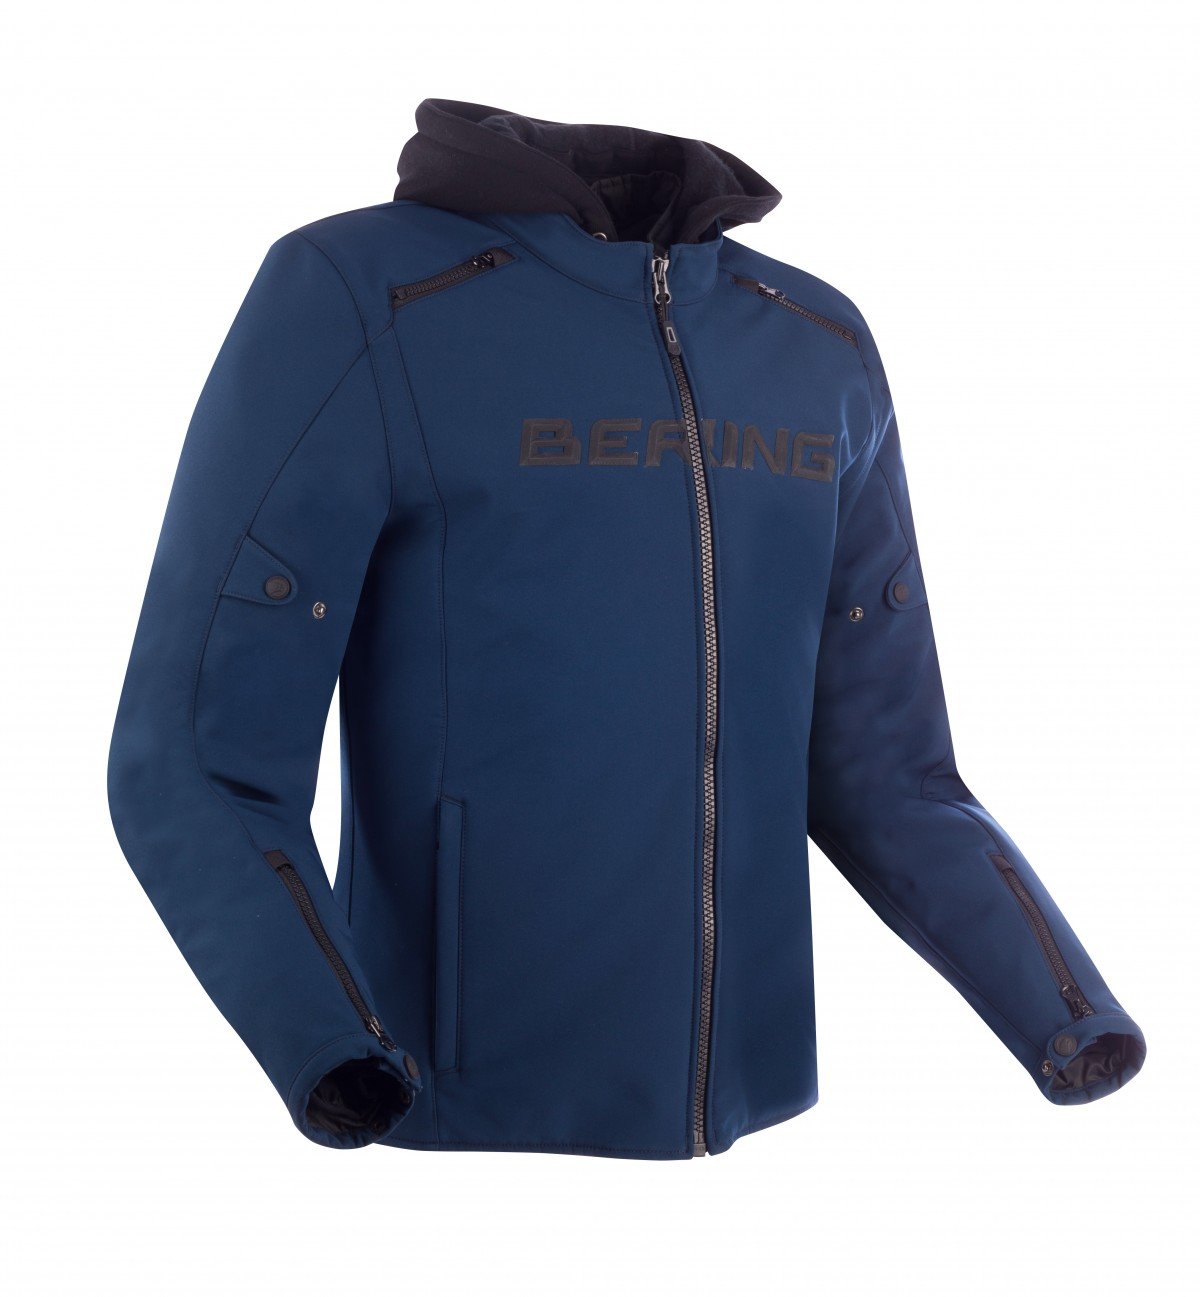 Image of Bering Elite Jacket Navy Blue Size L ID 3660815170236